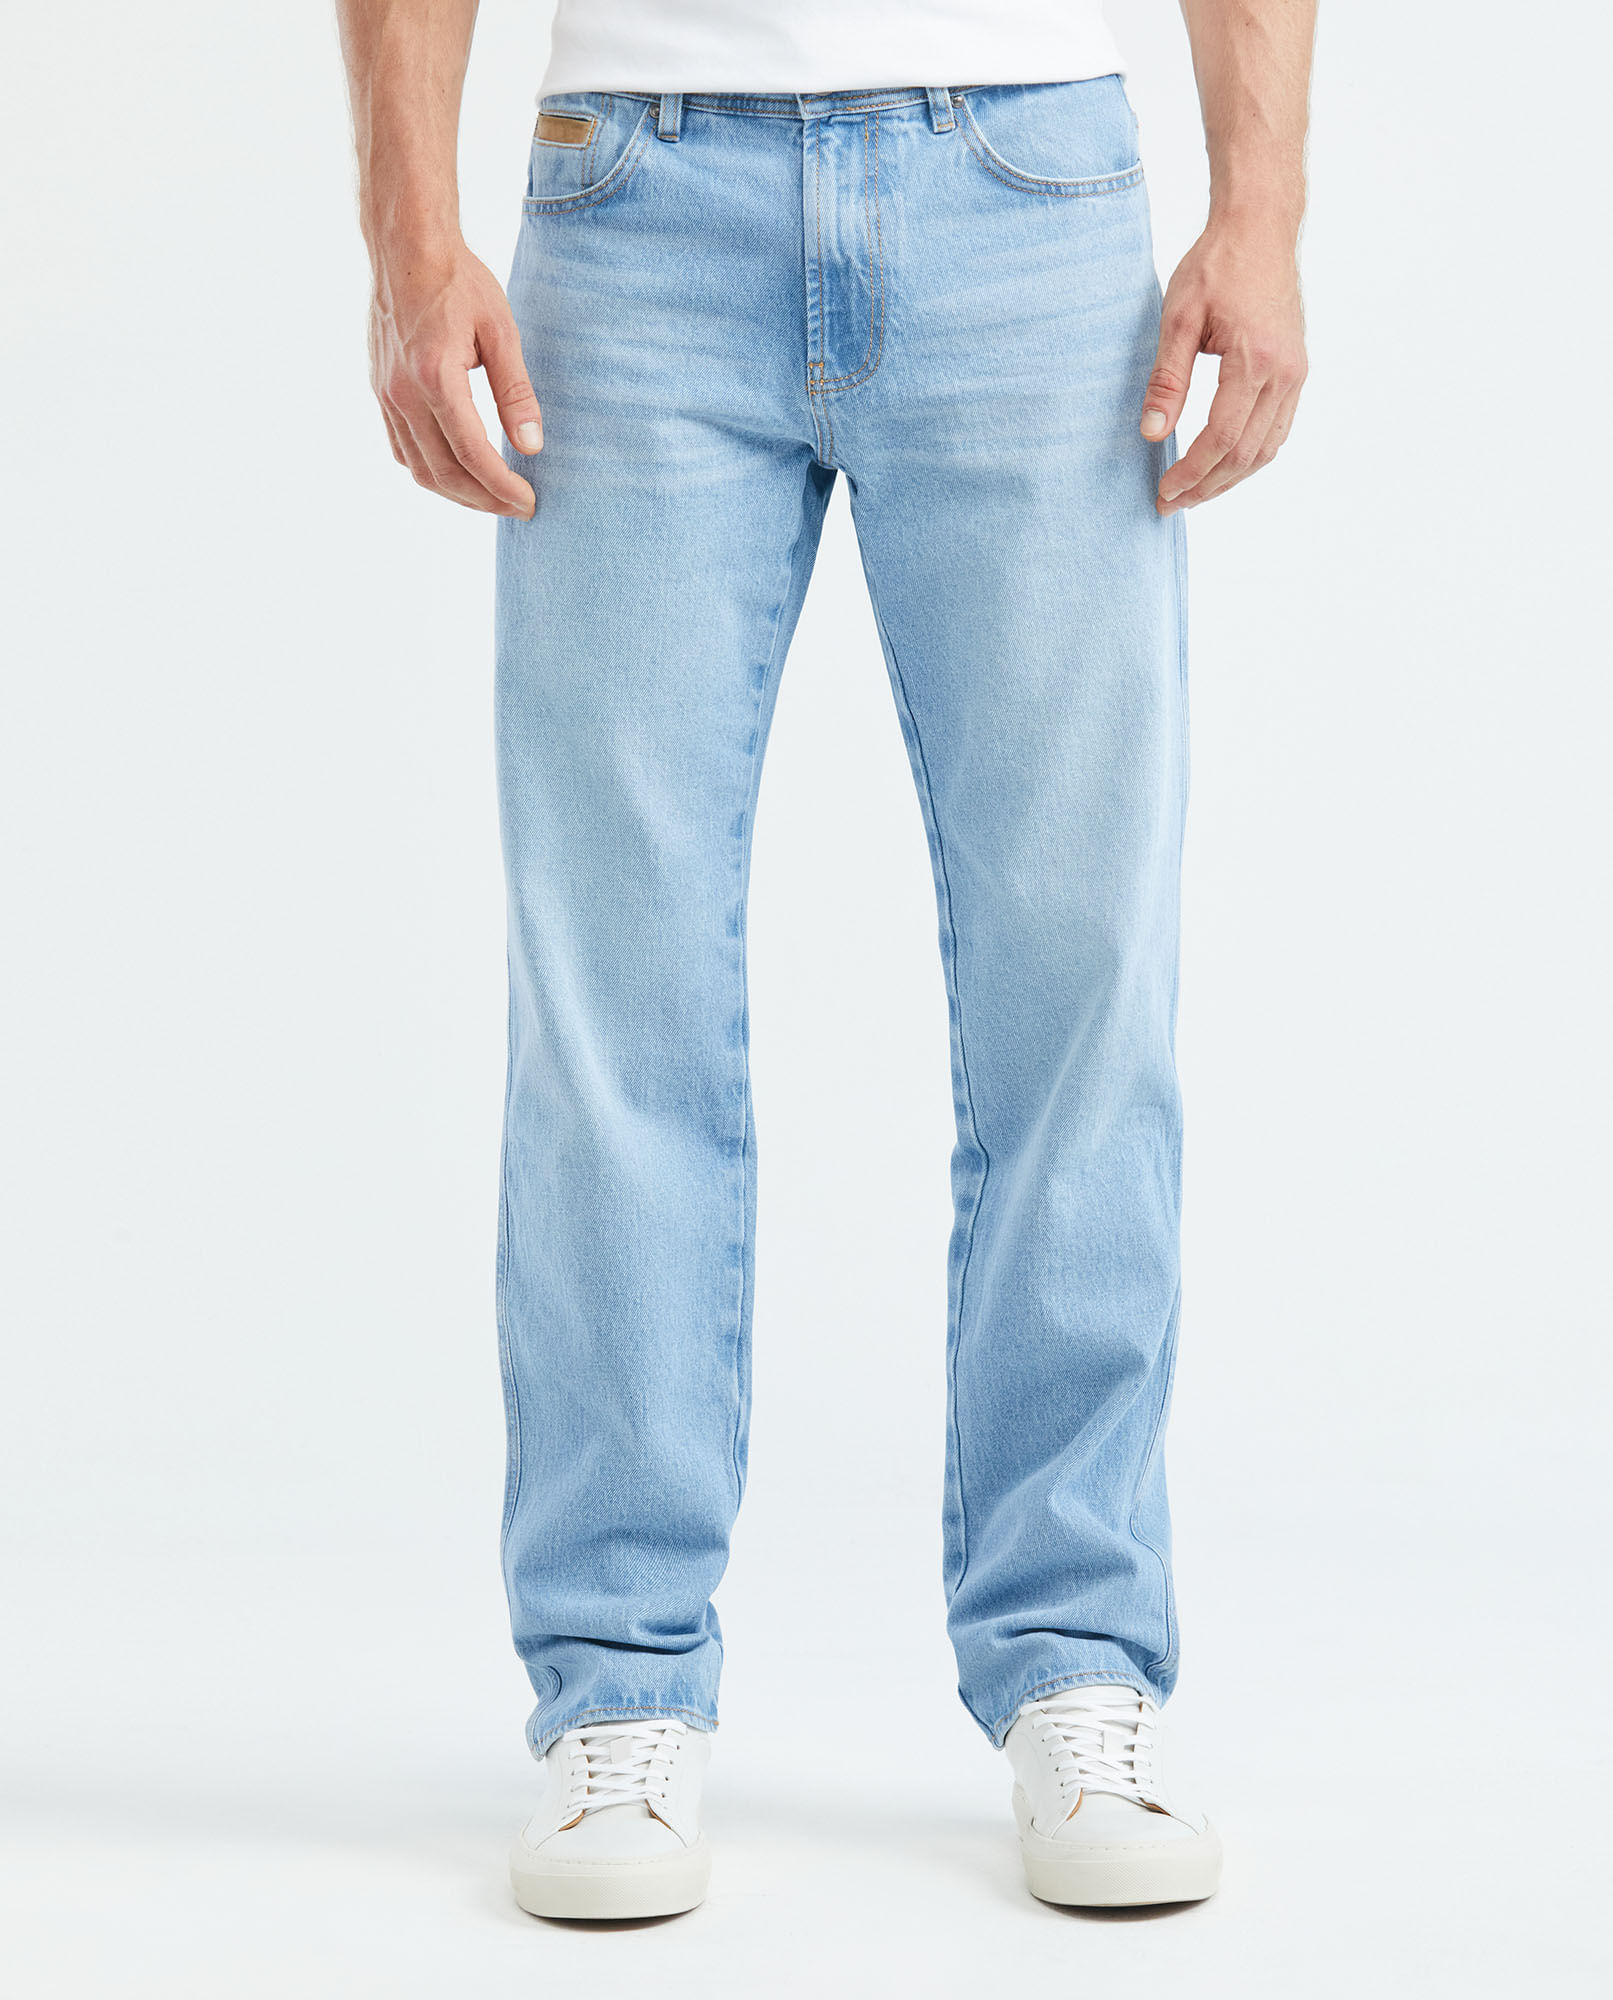 Jeans de mezclilla Stretch MCHK 8008. Tiro Alto, Color azul claro. Para  hombre MCHK Stretch Fit